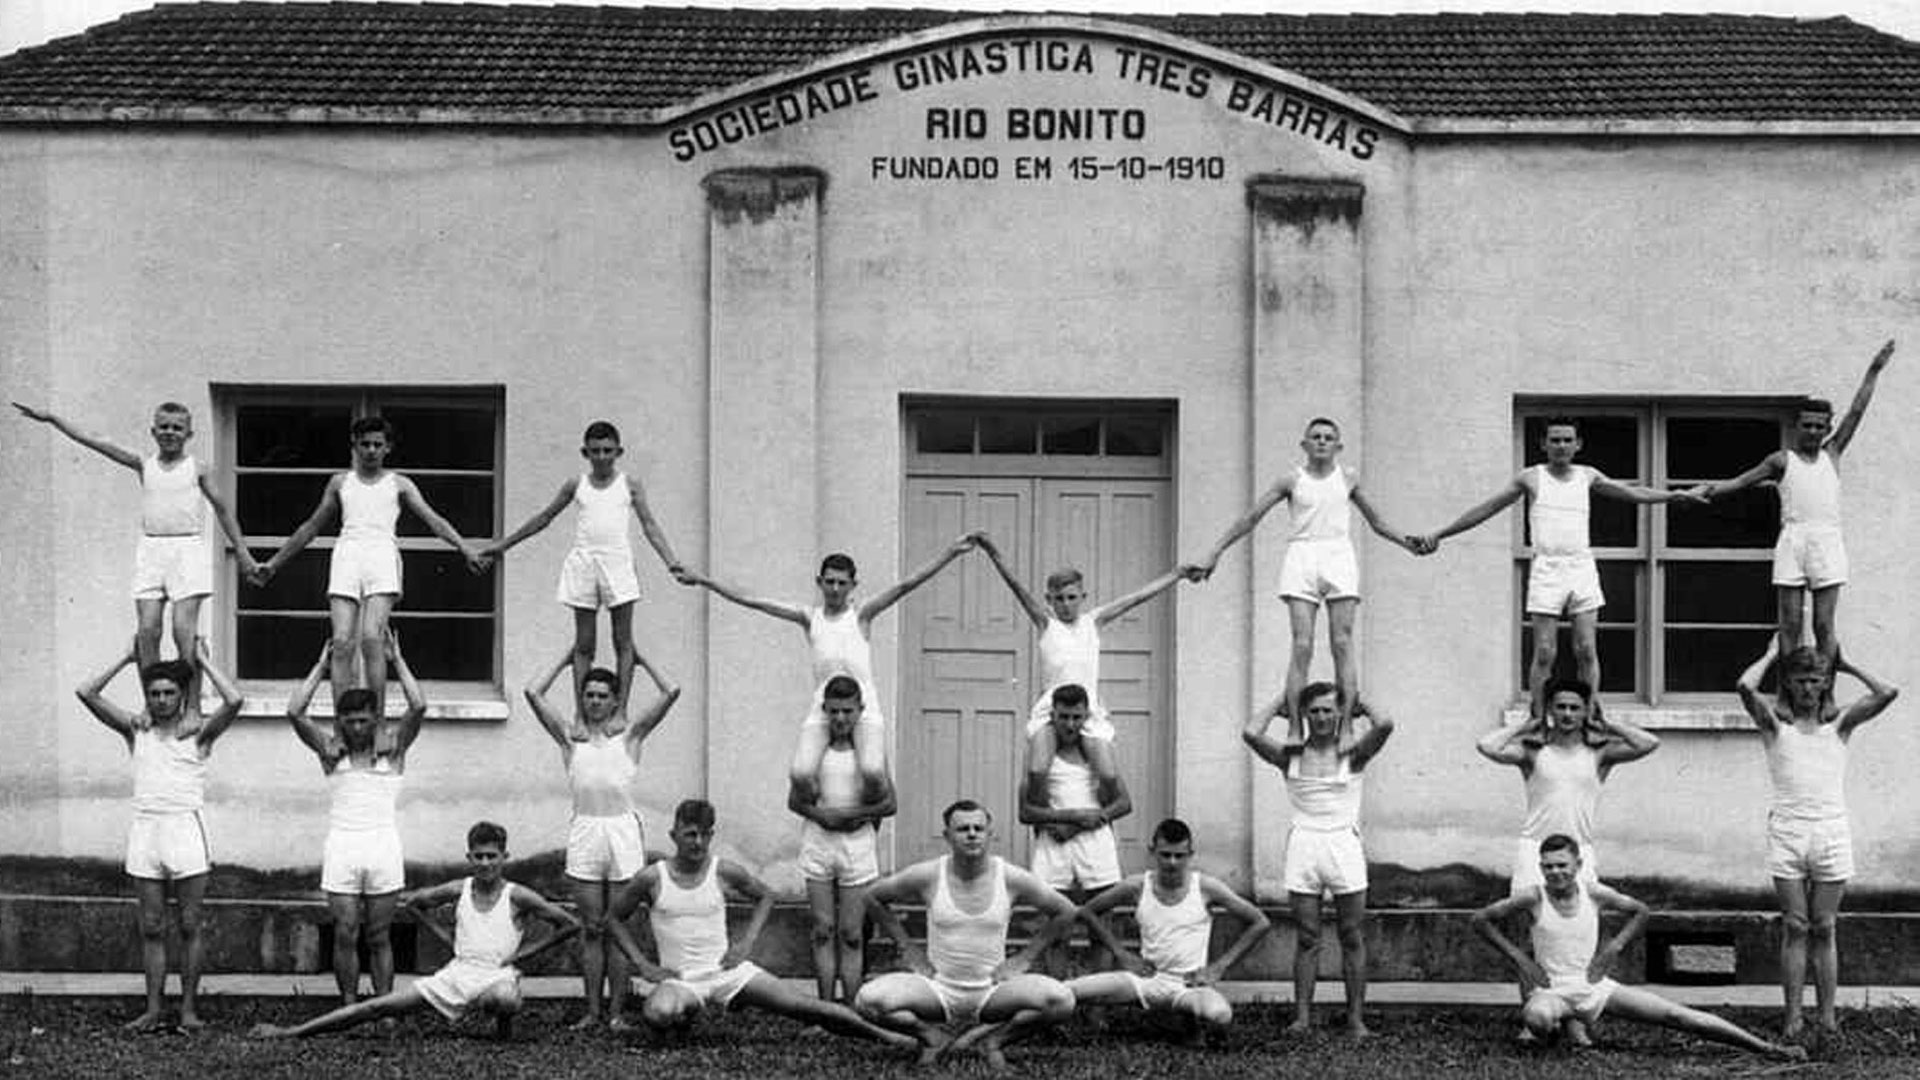 Sociedade Ginástica Tres Barras, Rio Bonito, Santa Catarina, gegründet am 15. 10. 1910, zum 50-jährigen Jubiläum 1960. | Bildquelle: Archiv SC Tres Barras.